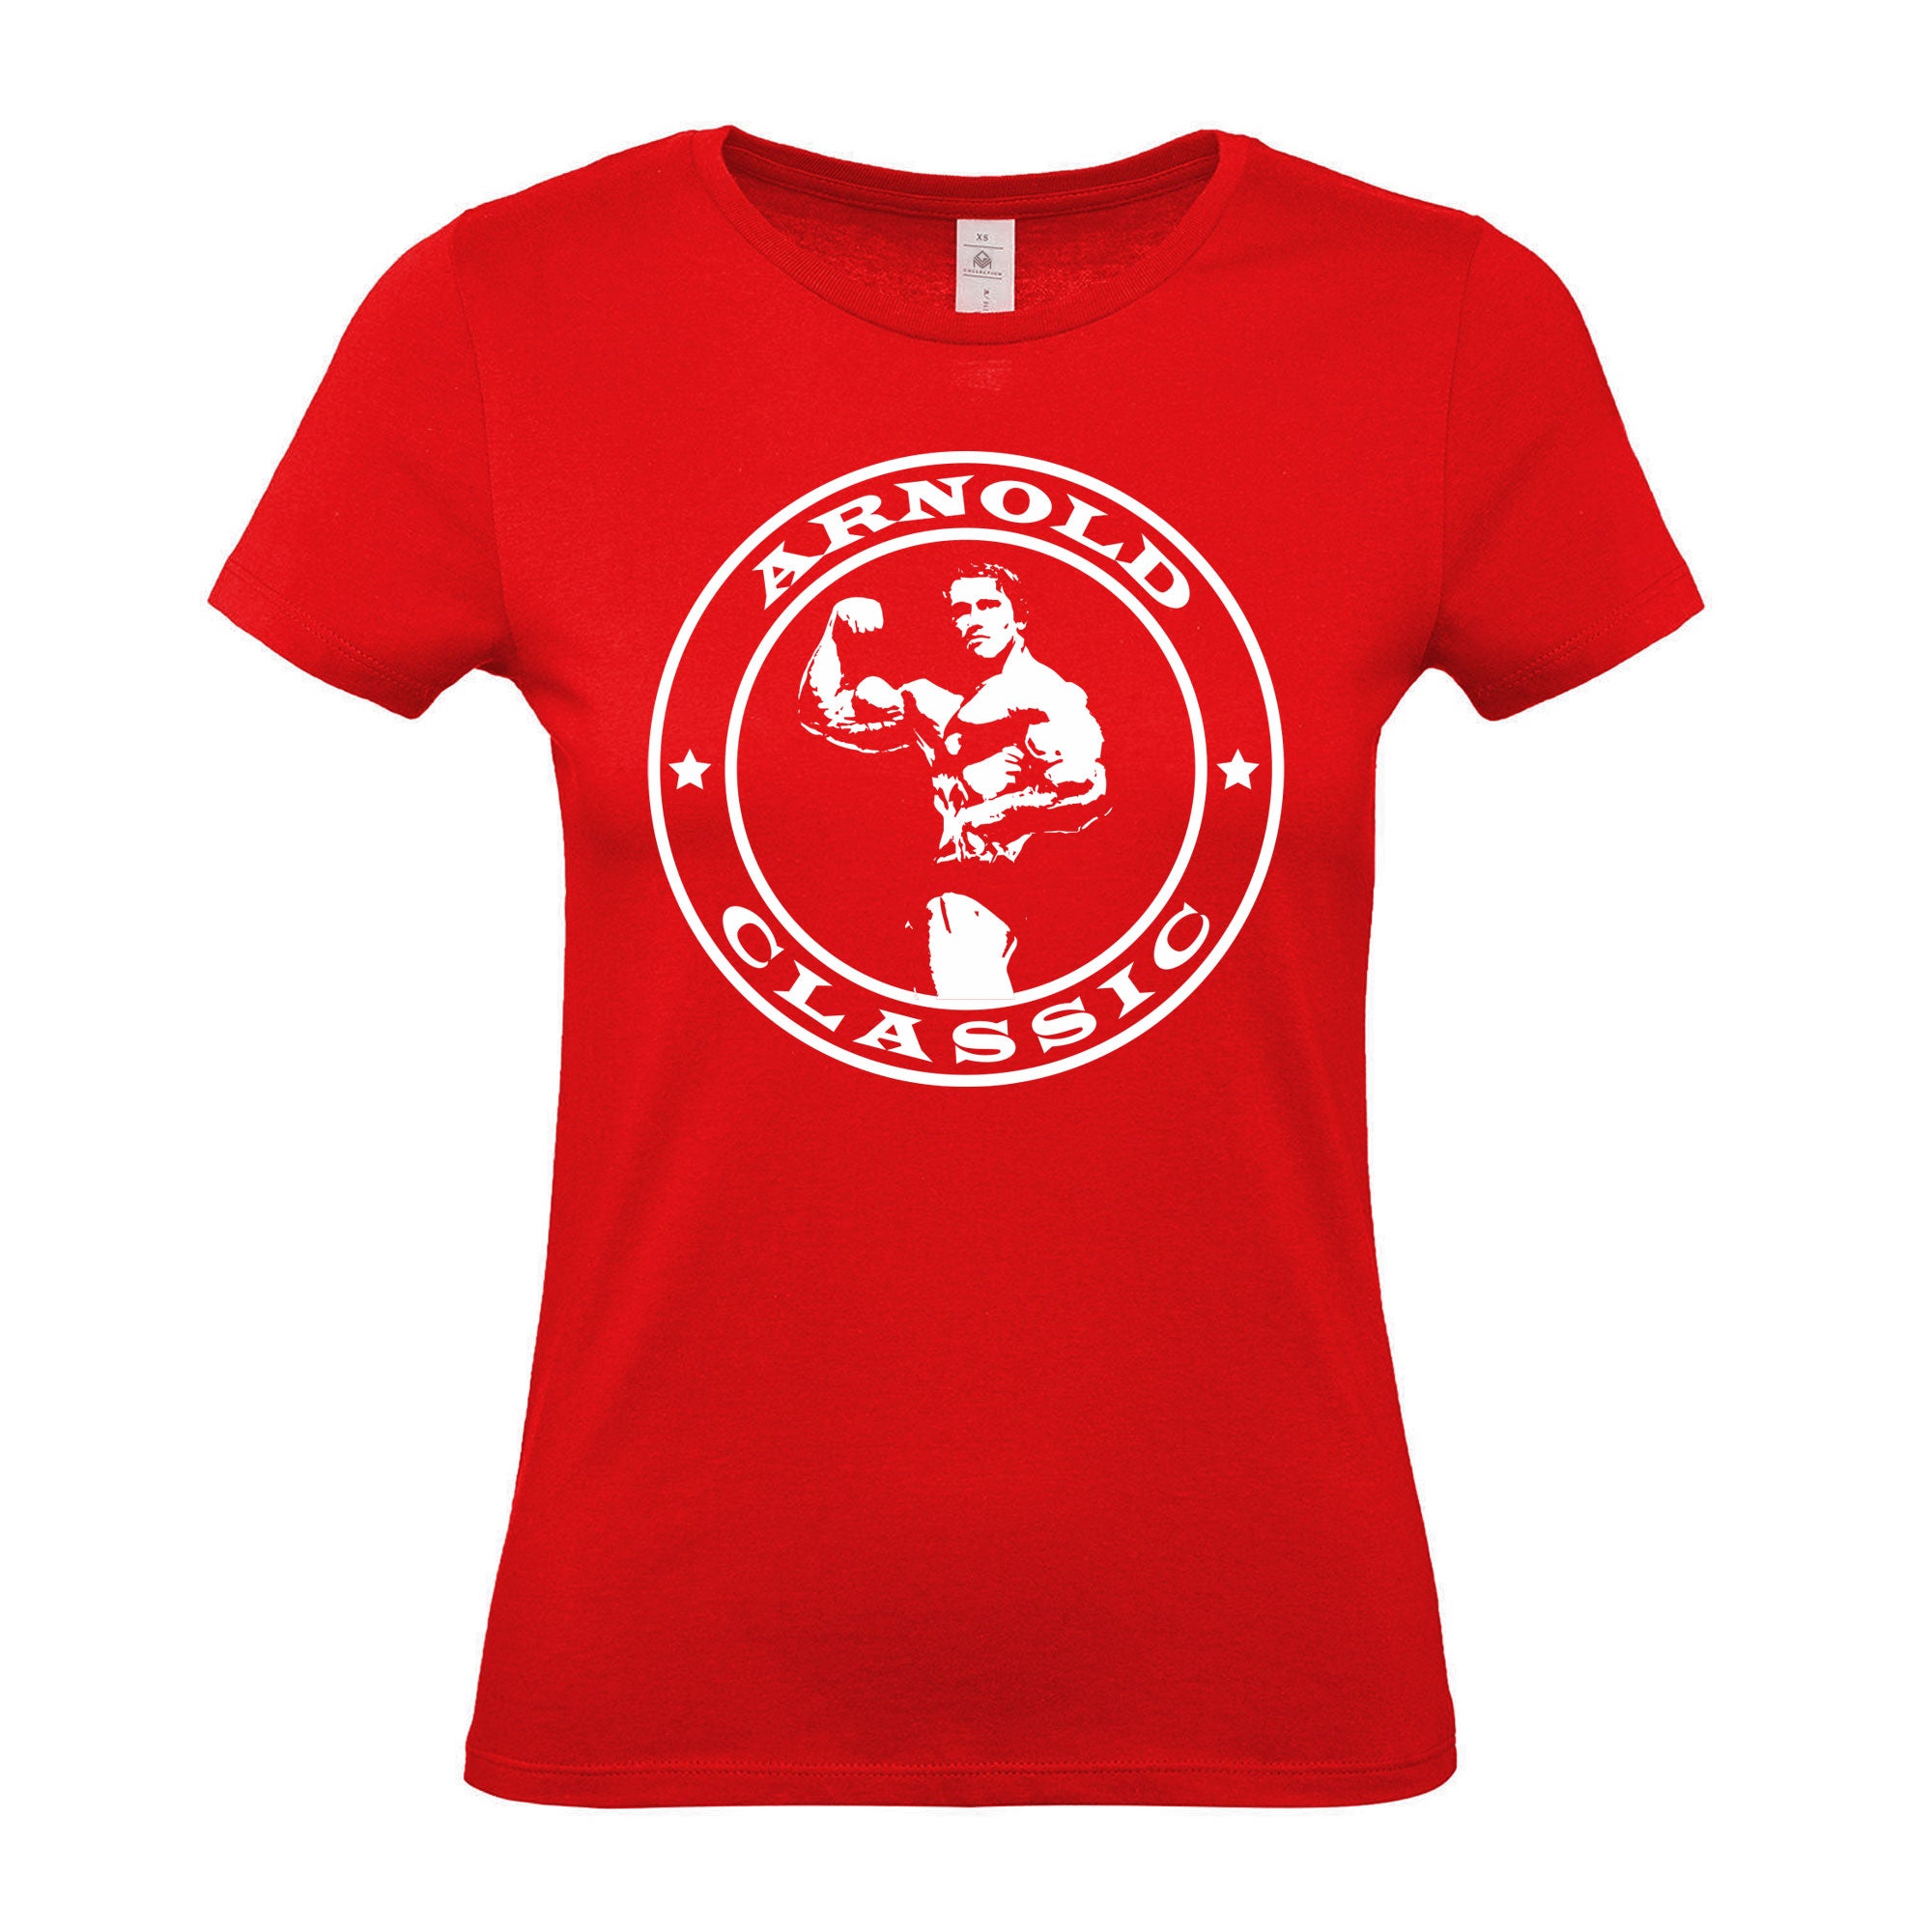 Arnold Classic - Women's Gym T-Shirt